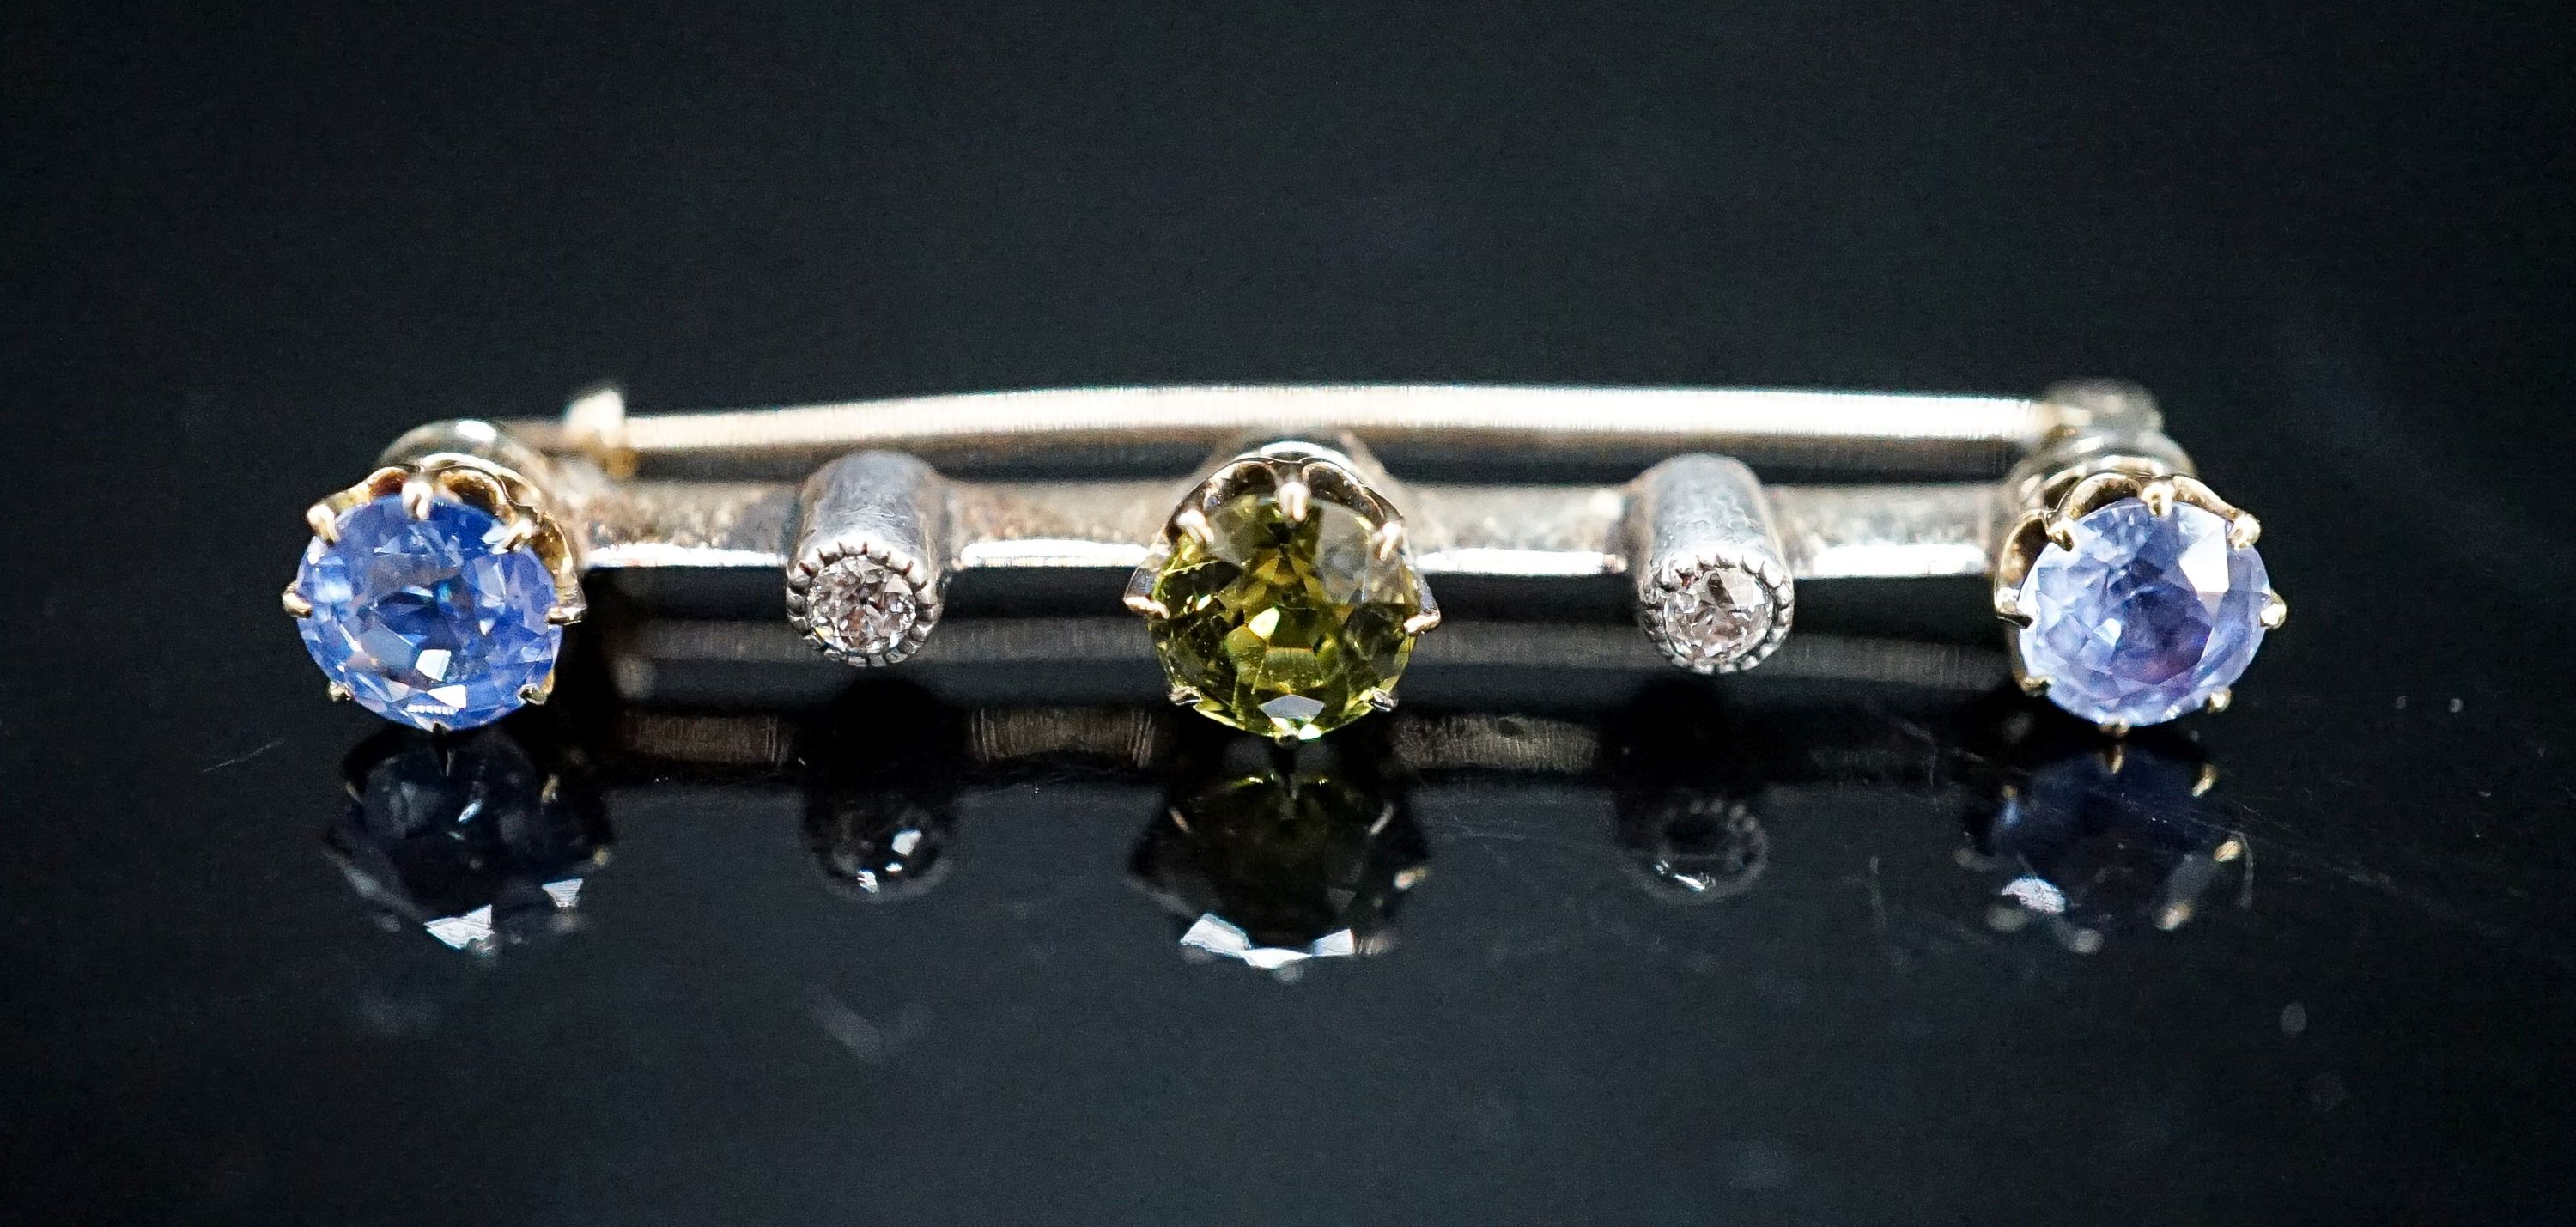 A yellow metal, single stone garnet?, two stone Ceylon sapphire and two stone diamond chip set bar brooch, 37mm, gross weight 2.8 grams.